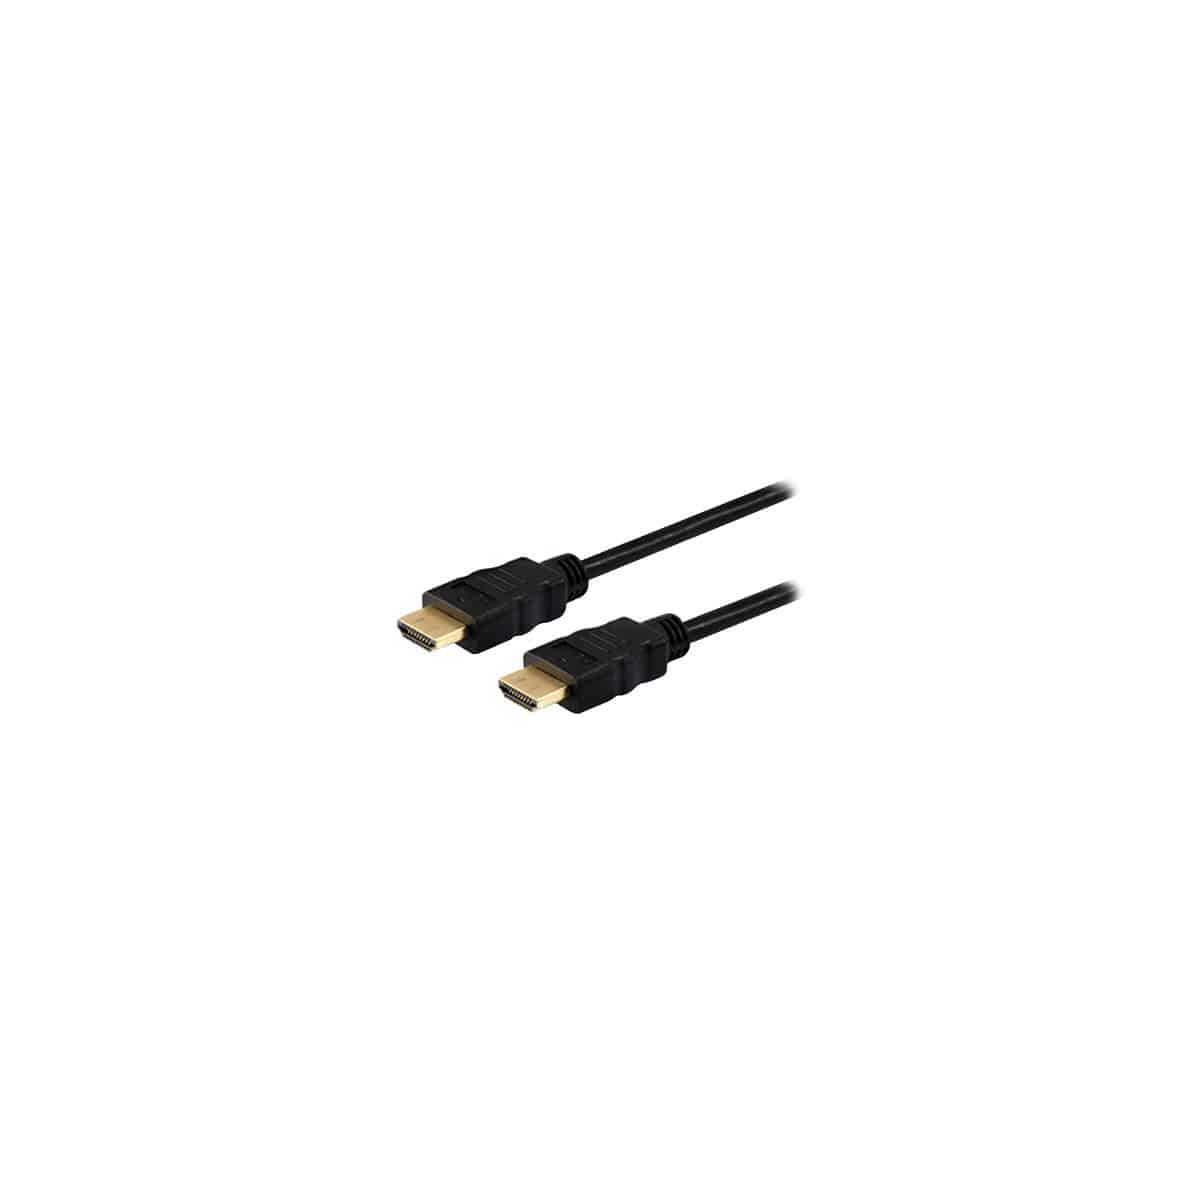 Cable HDMI 2.0 - 1.8m